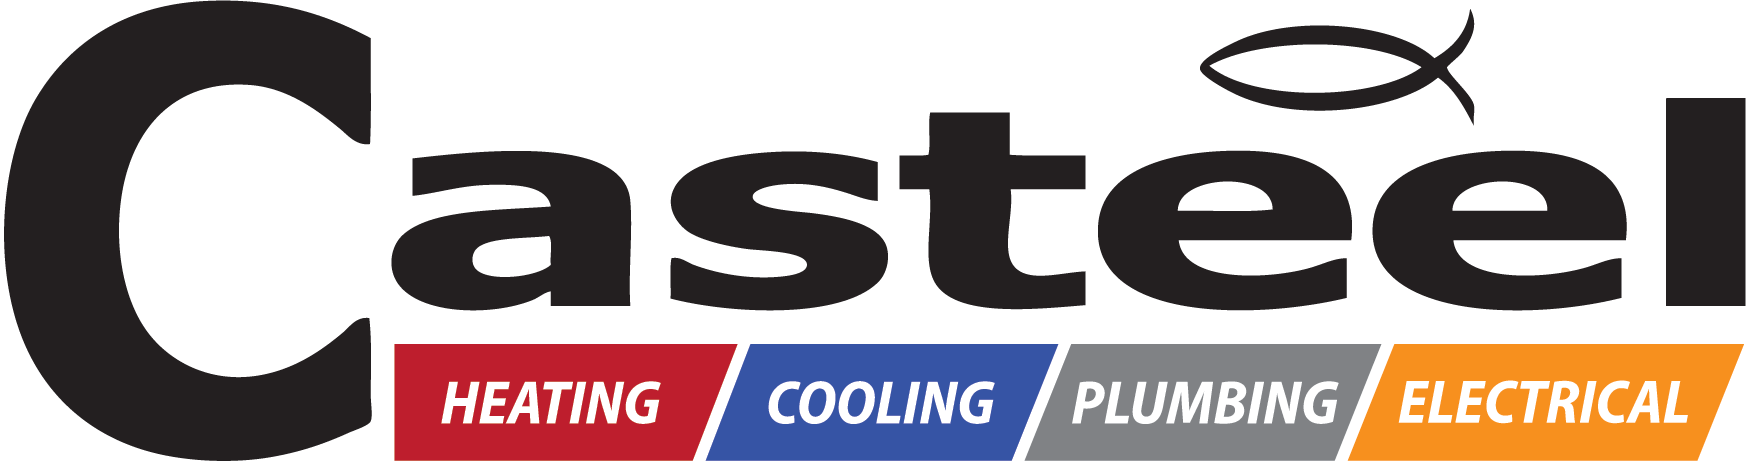 Casteel Heating & Cooling, LLC Logo